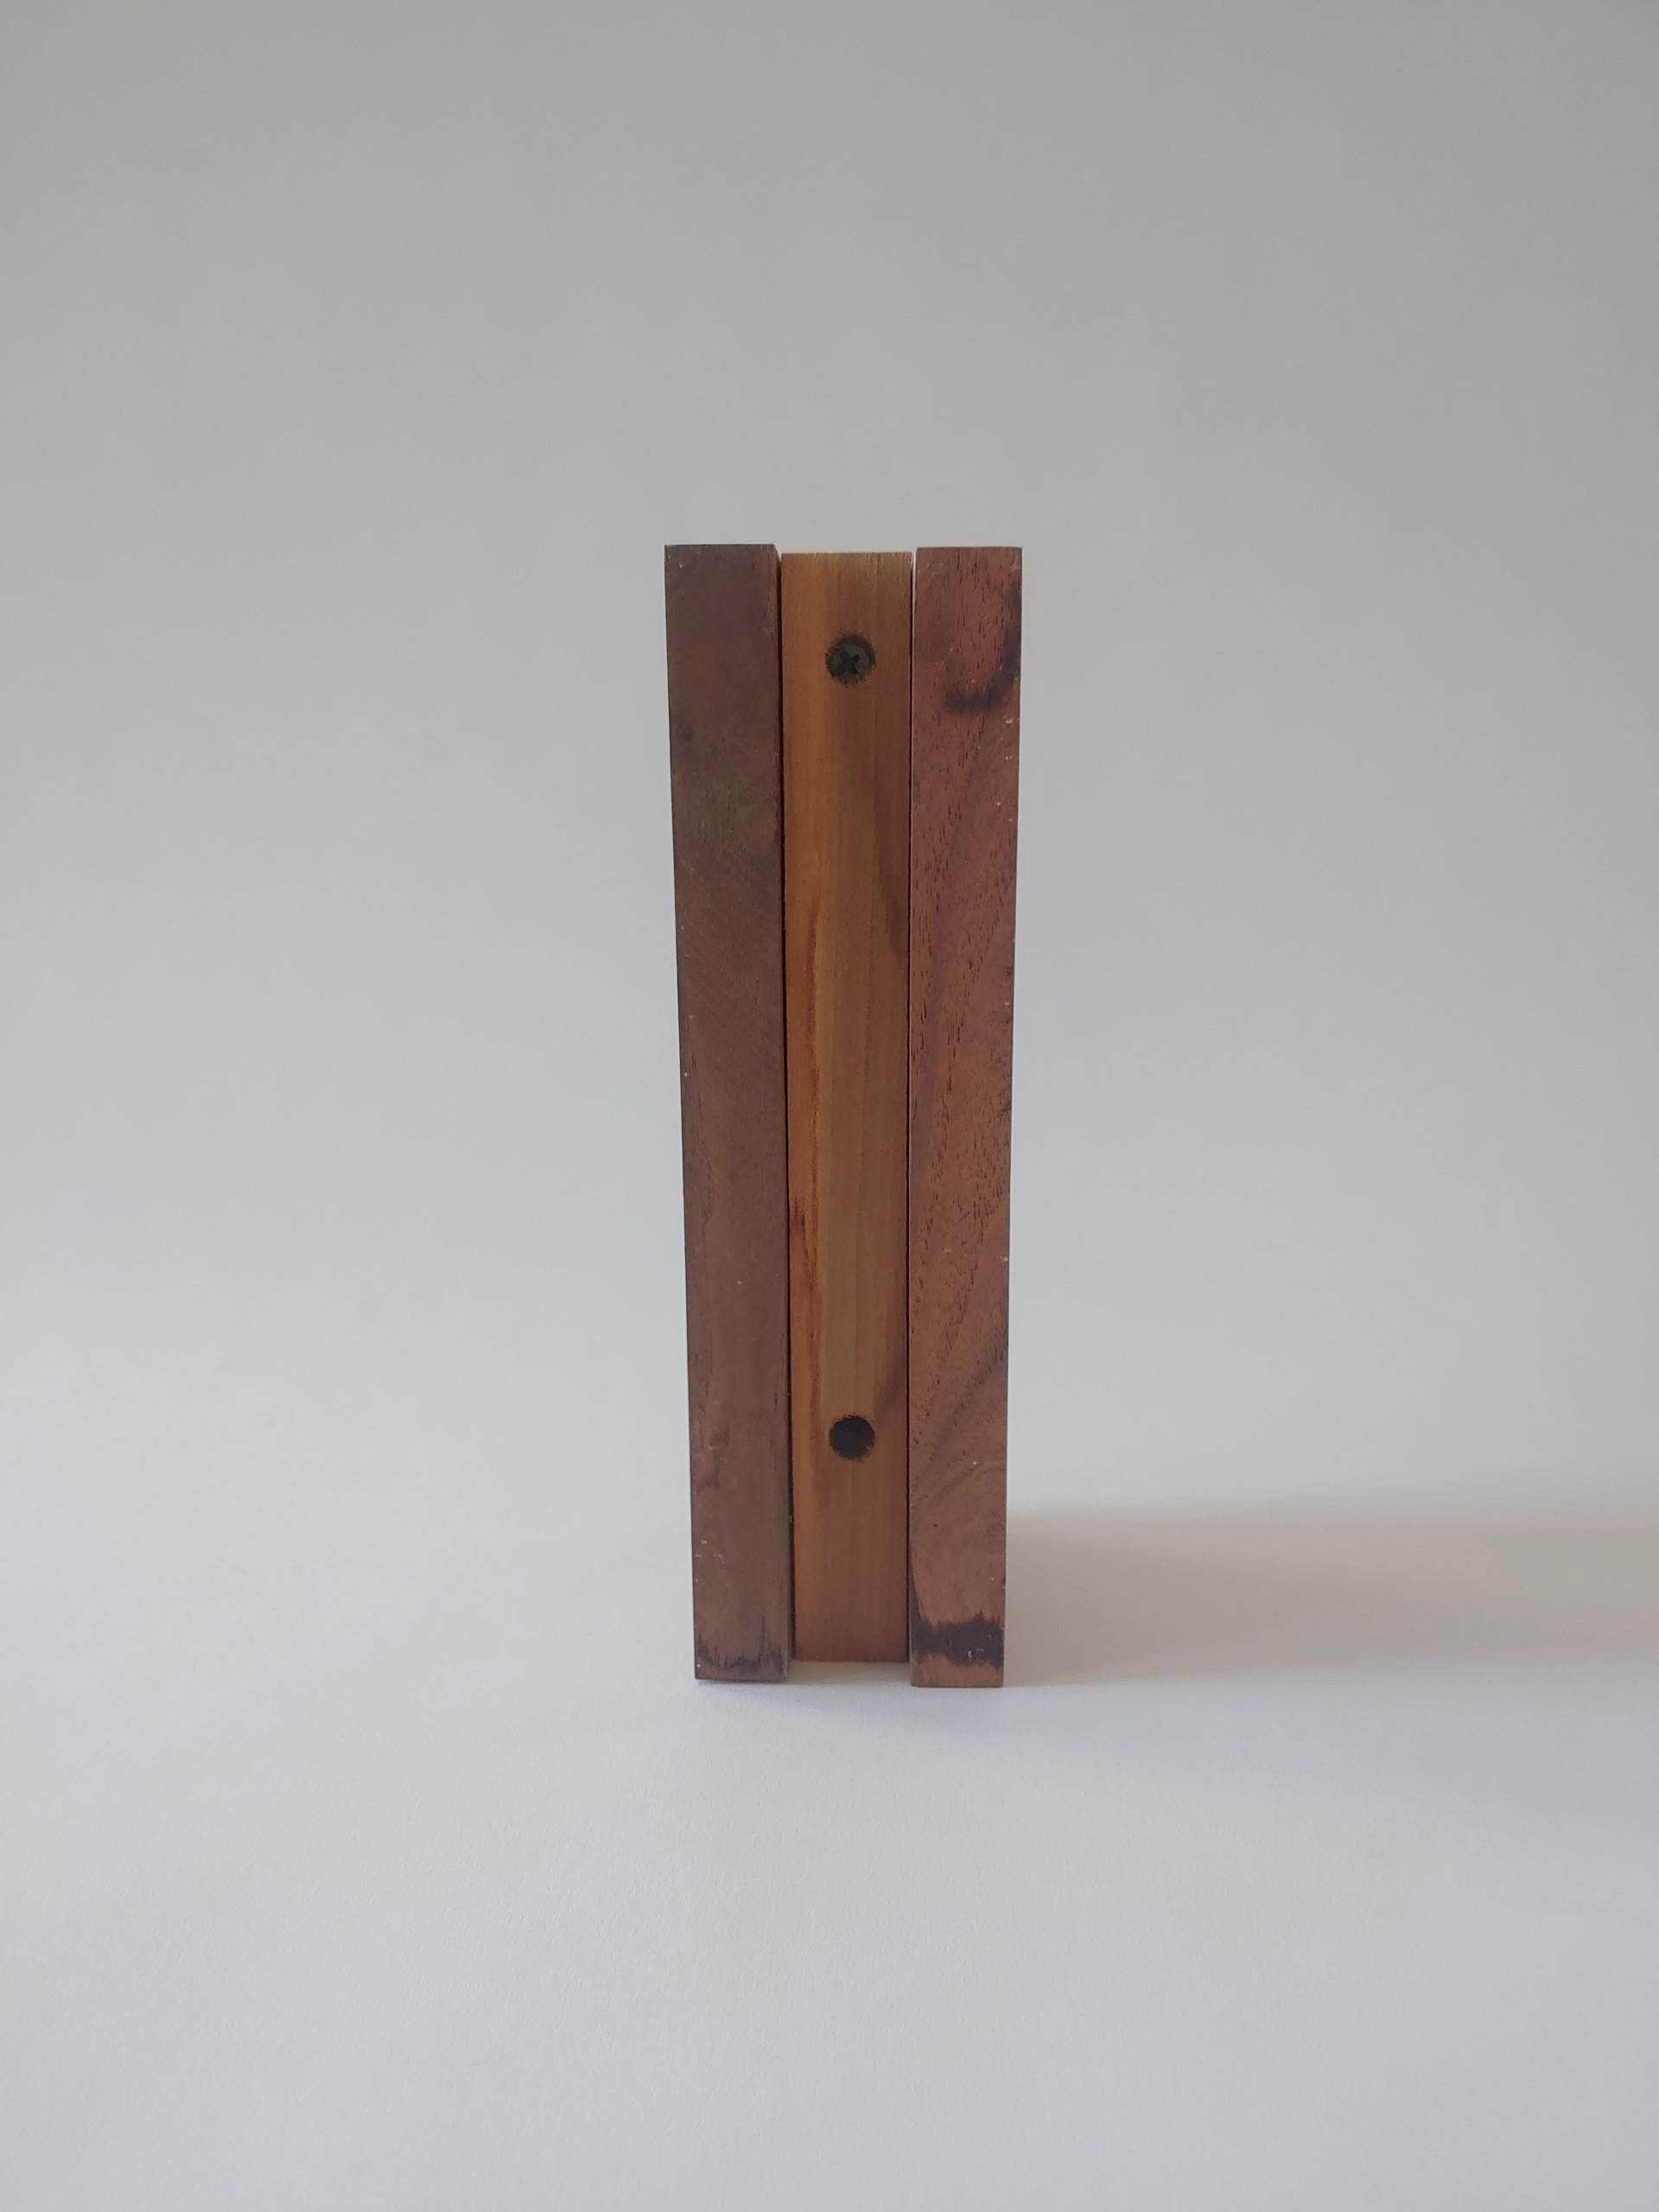 Model #3 - Wood Sculpture by David Amdur